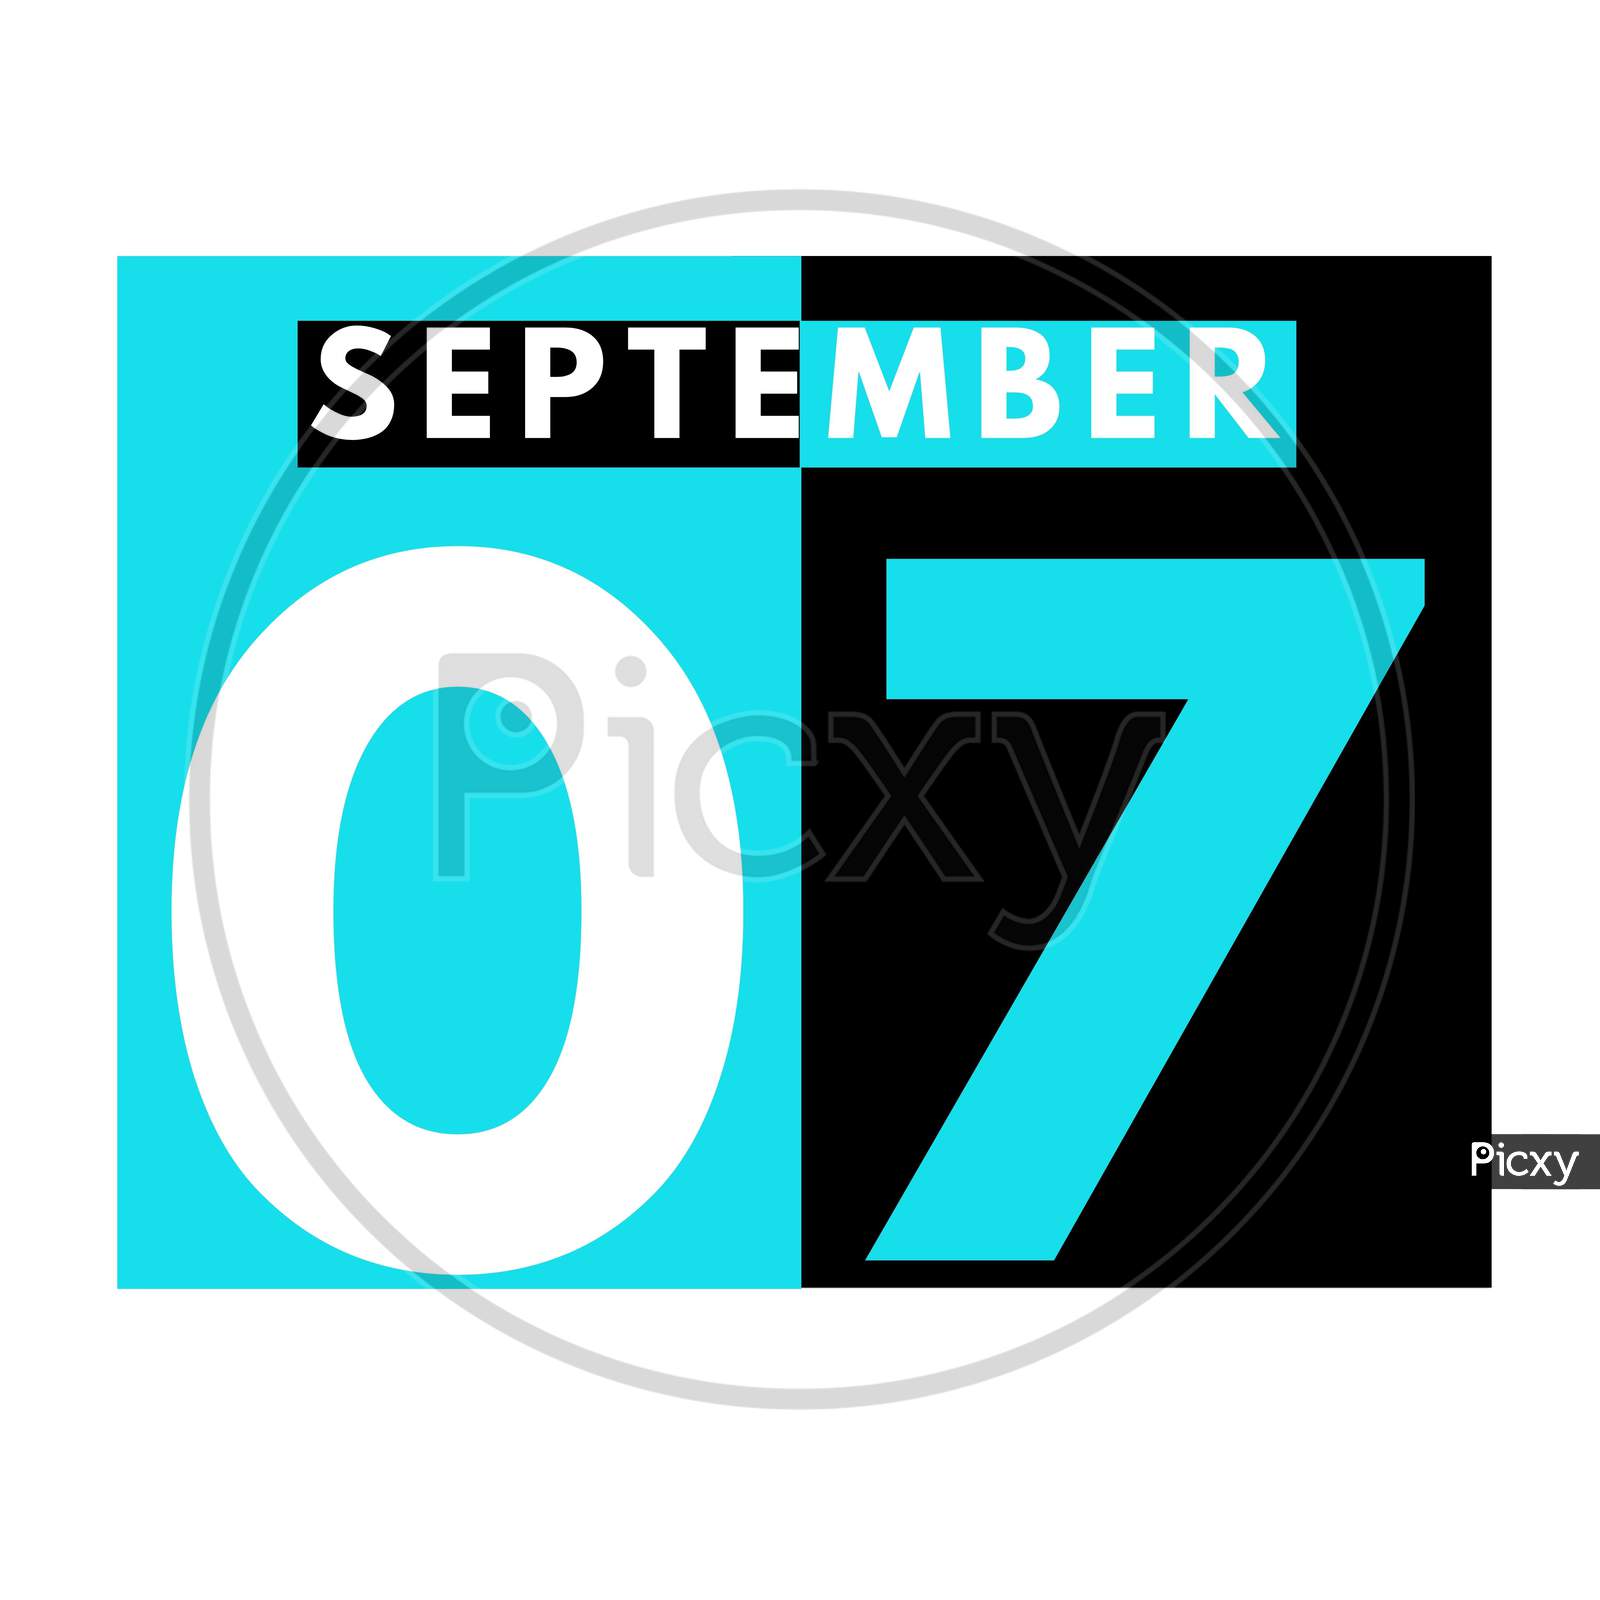 September 7 . Modern Daily Calendar Icon .Date ,Day, Month .Calendar For The Month Of September